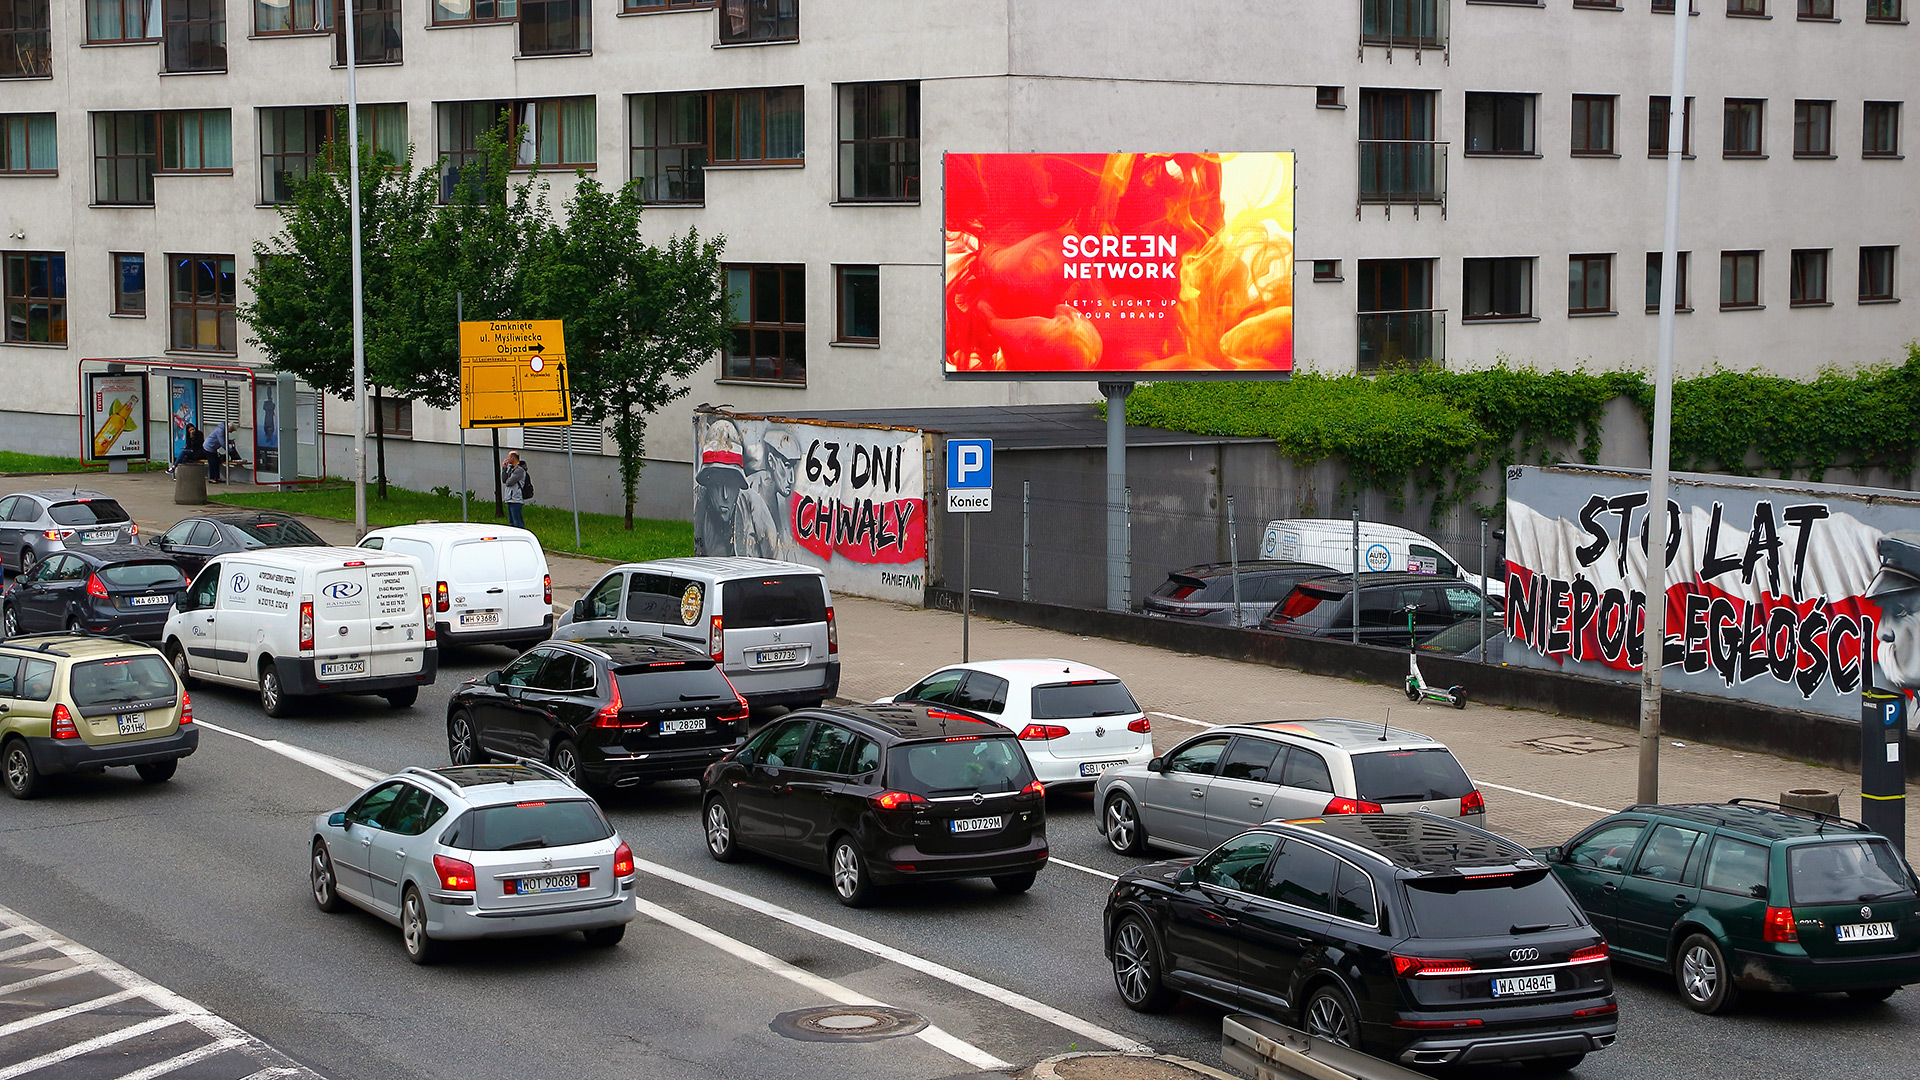 Reklama na telebimach Warszawa Wisłostrada 3 Maja ekran LED